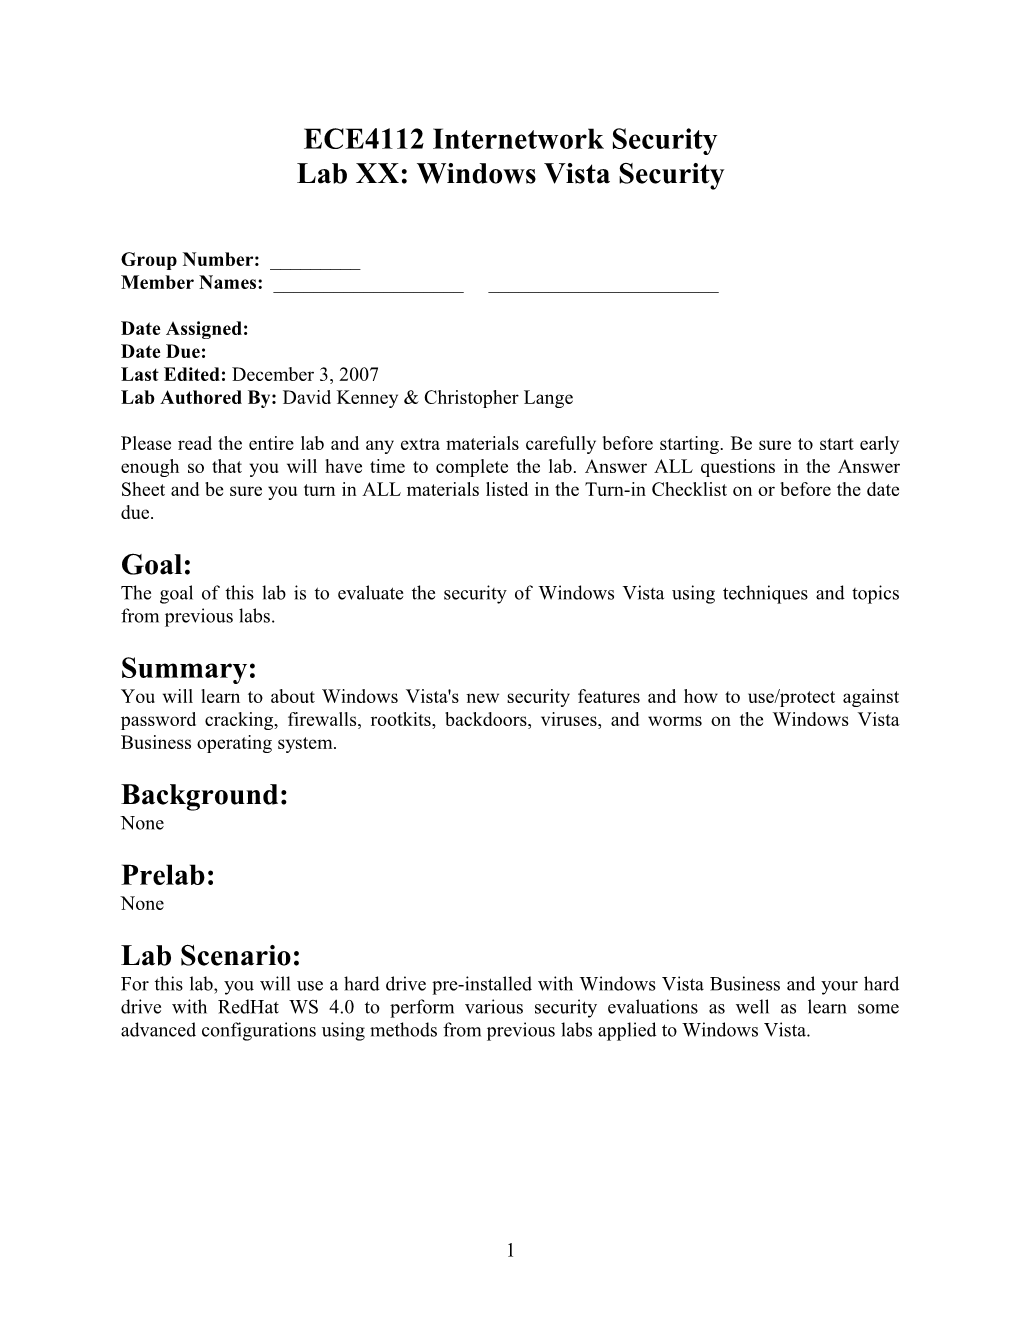 Lab XX: Windows Vista Security